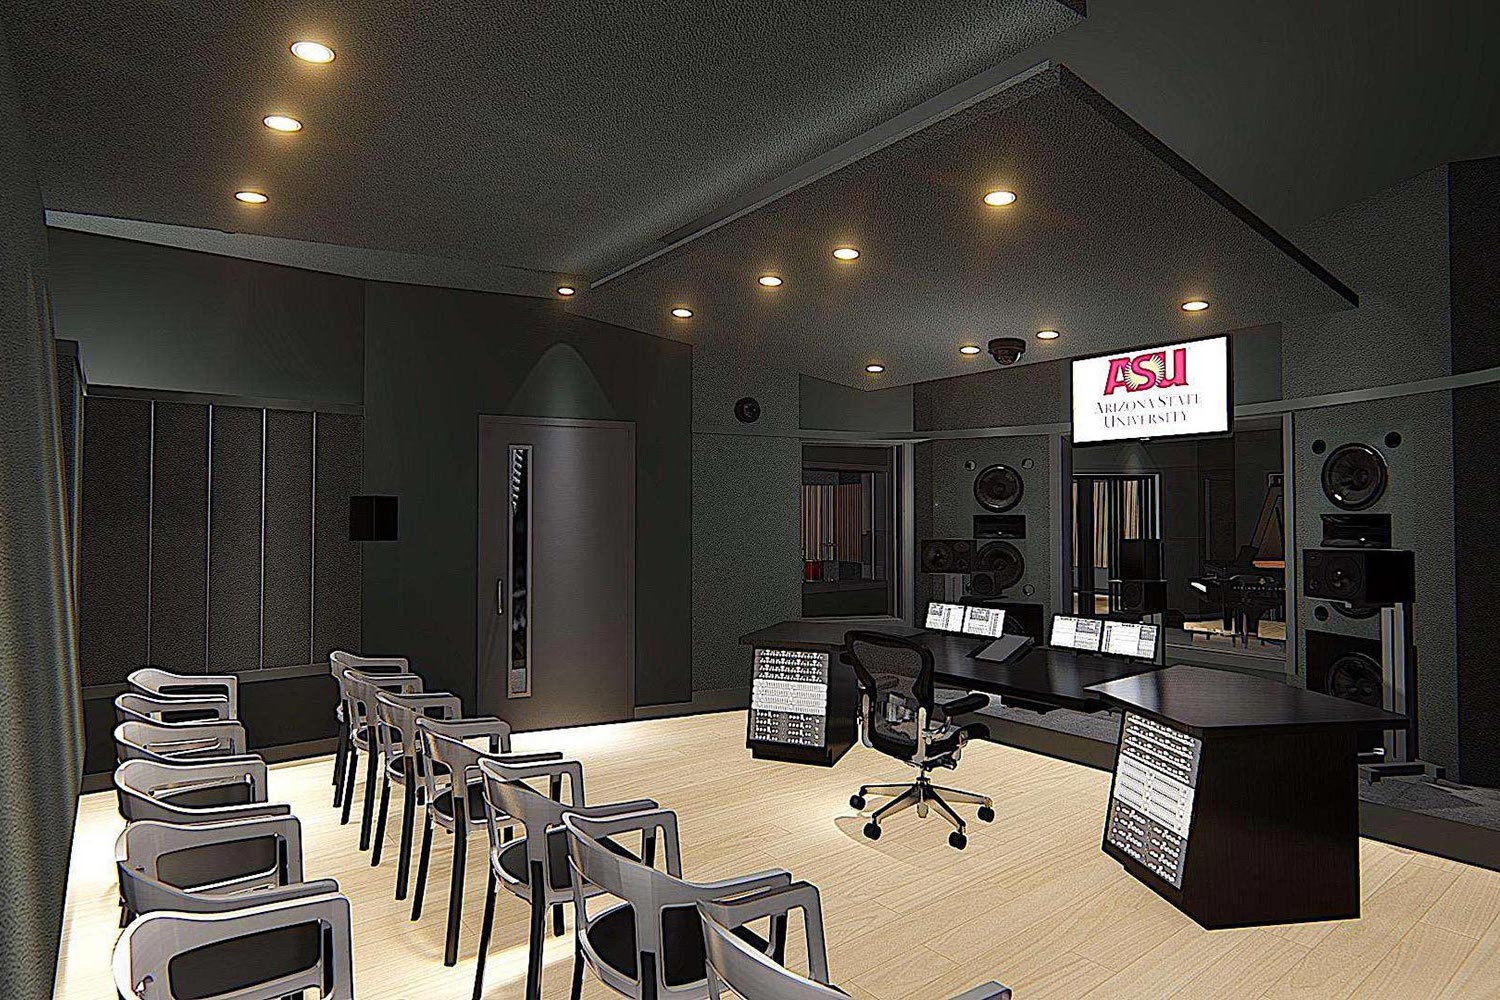 Arizona State University - ASU University Center. New recording studios by WSDG. Renders.